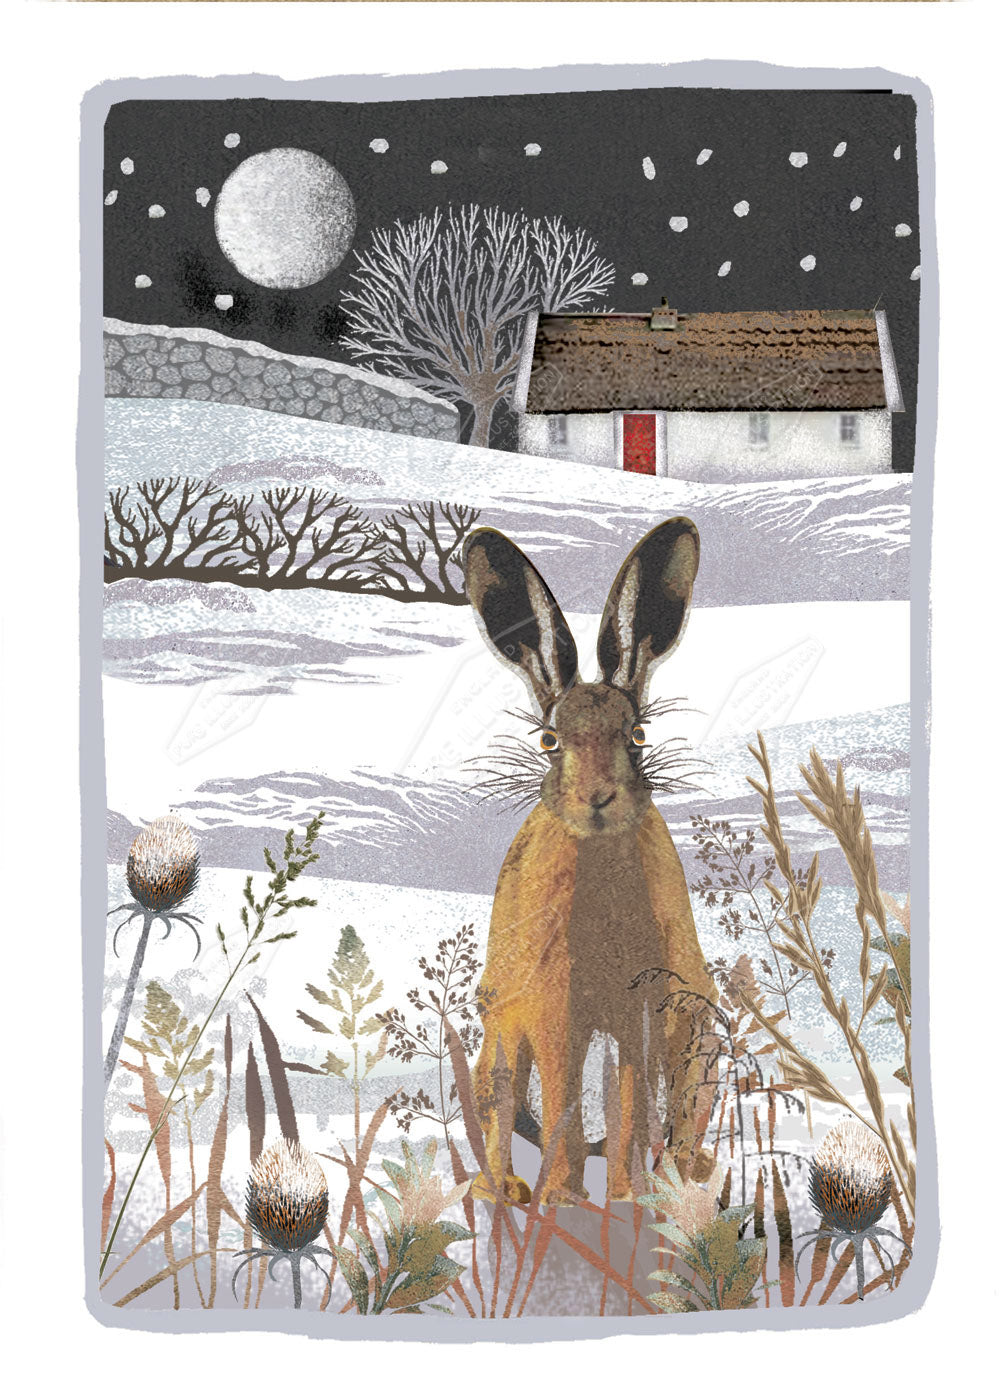 00023188DEV - Deva Evans is represented by Pure Art Licensing Agency - Christmas Greeting Card Design